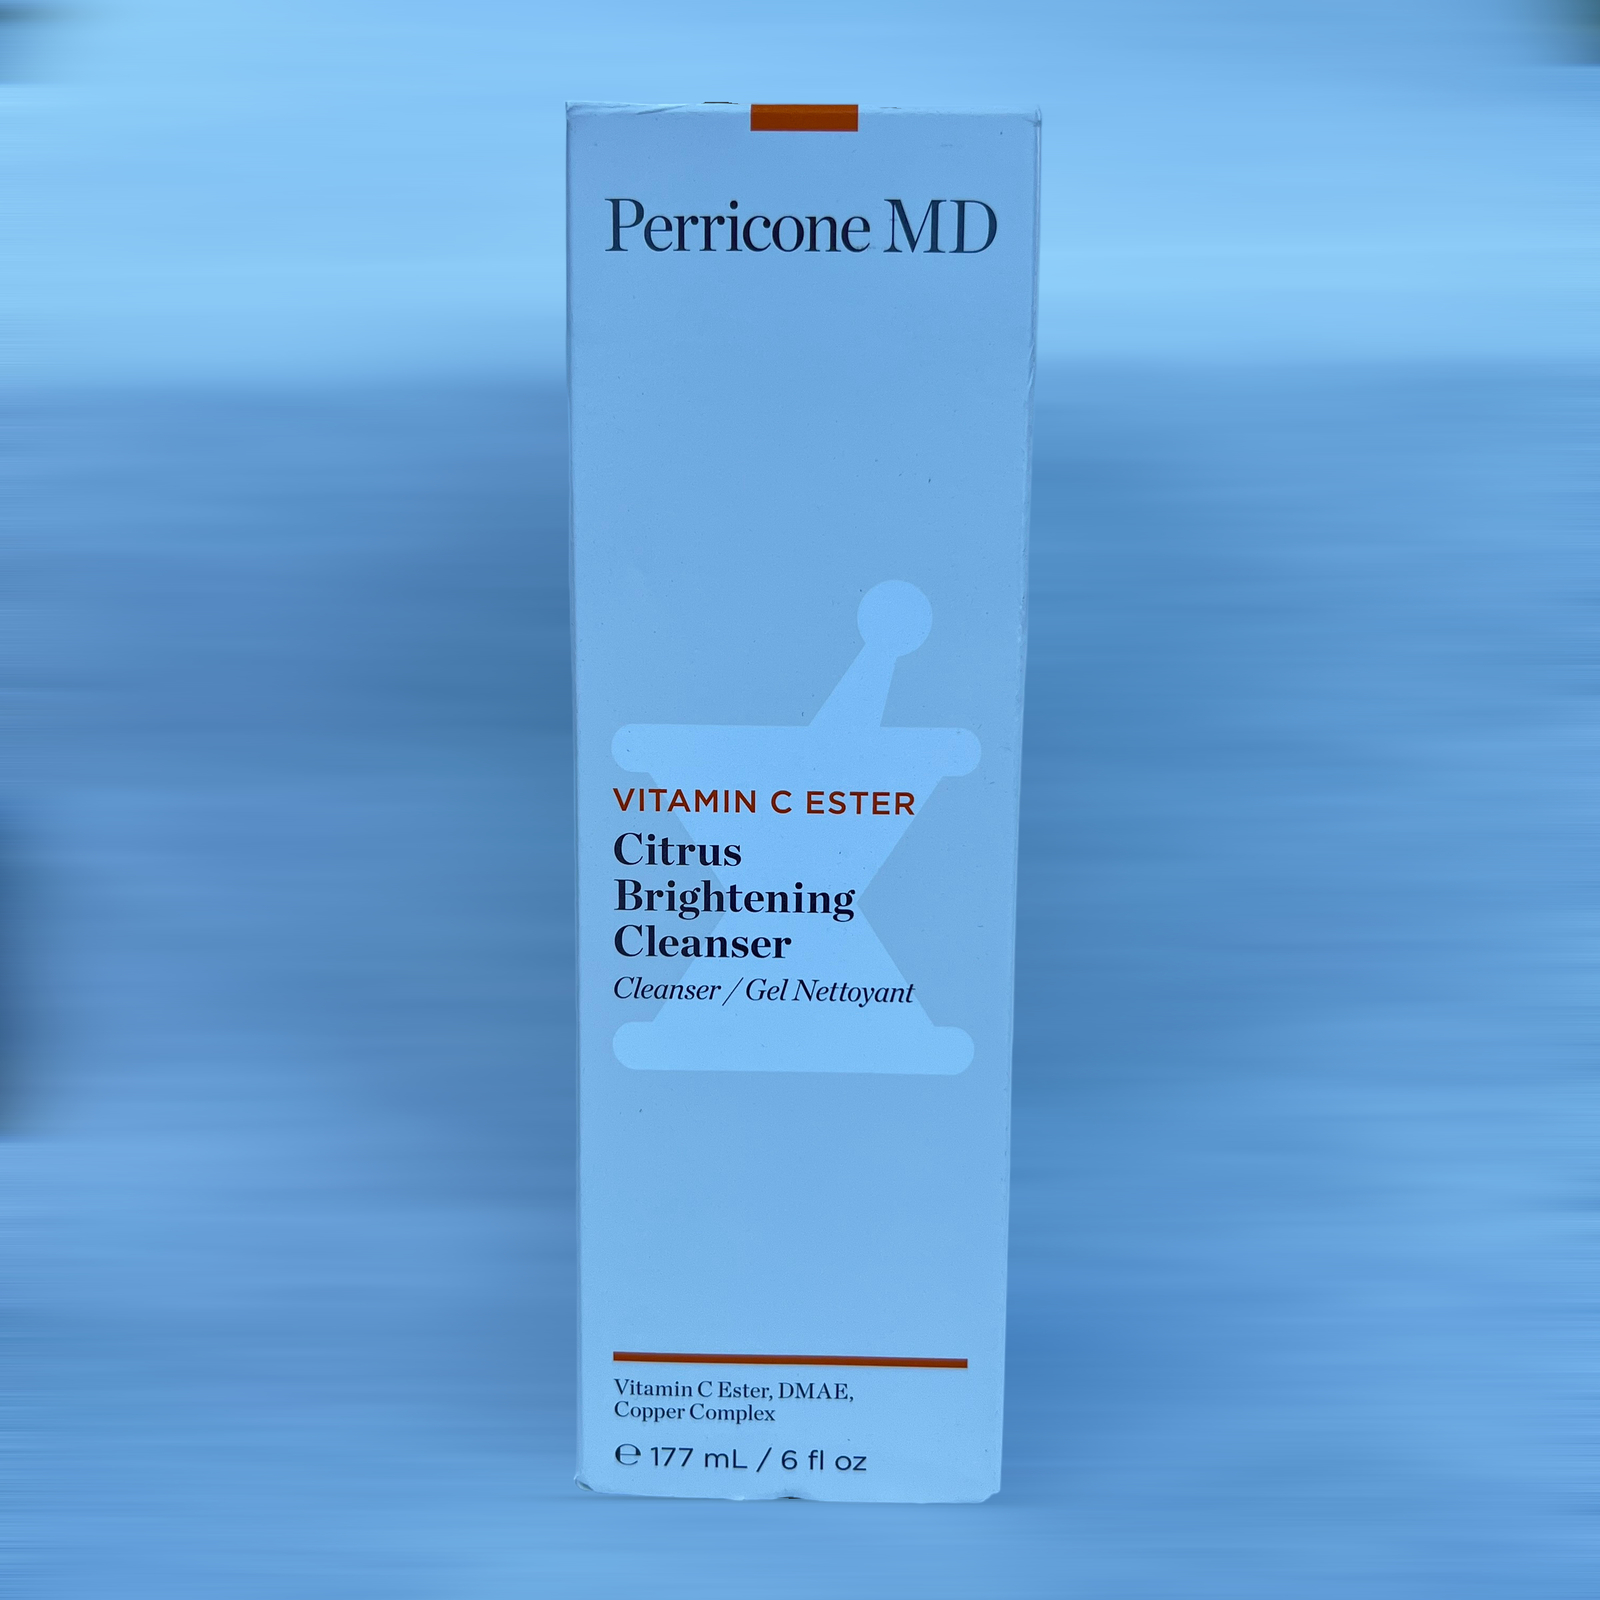 Perricone MD Vitamin C Ester Citrus Brightening Cleanser 6 fl oz Imperfect Box - $22.71